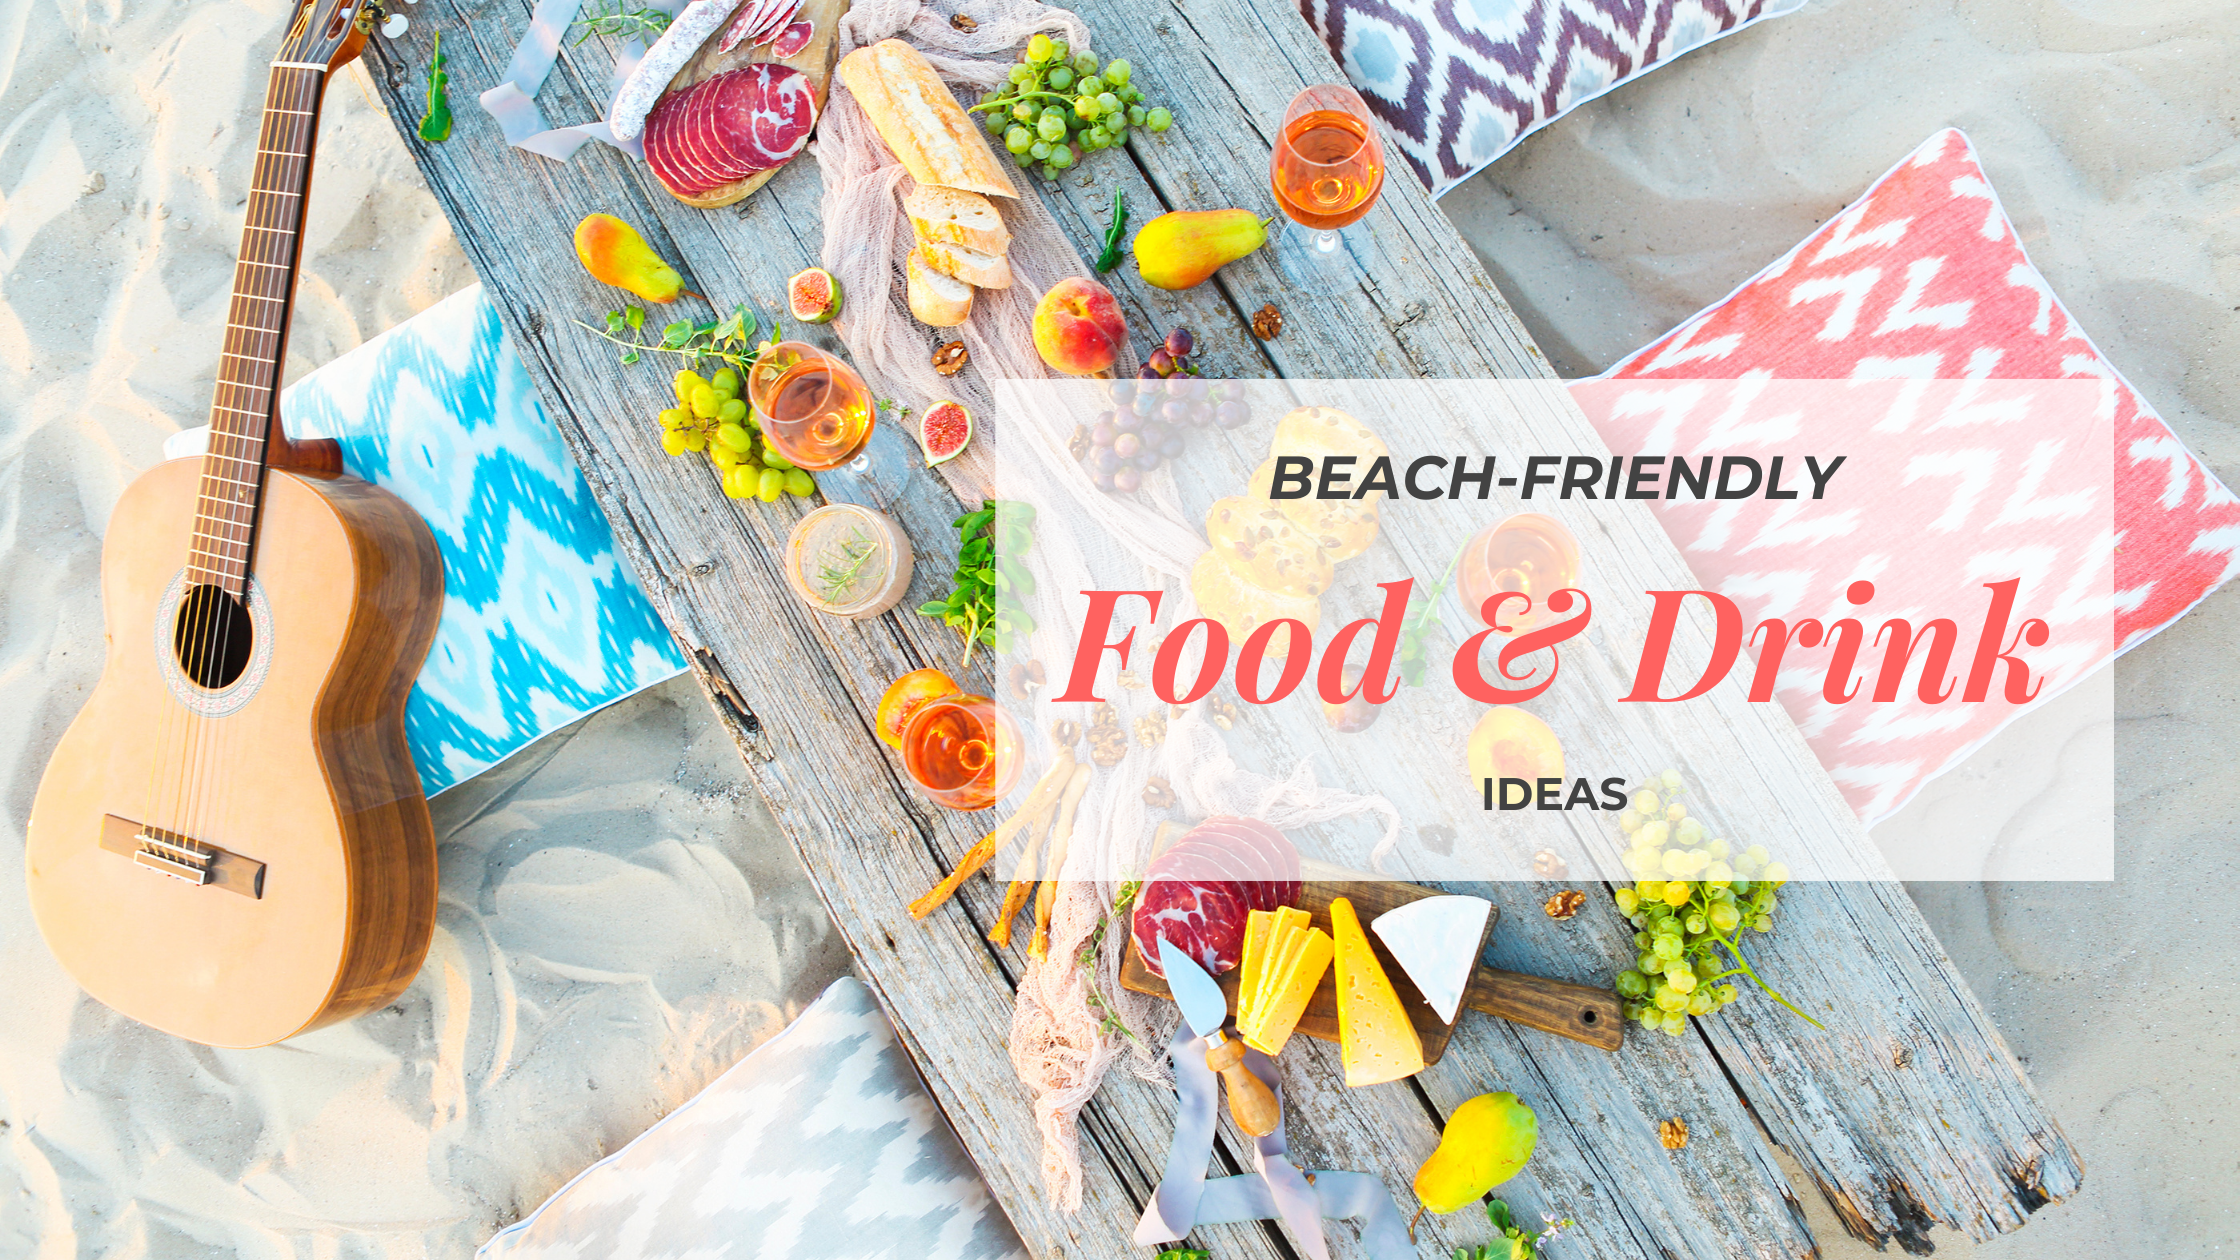 family beach day, beach friendly food, beach friendly drinks, beach food and drink ideas, what foods to pack for beach, family beach day packing